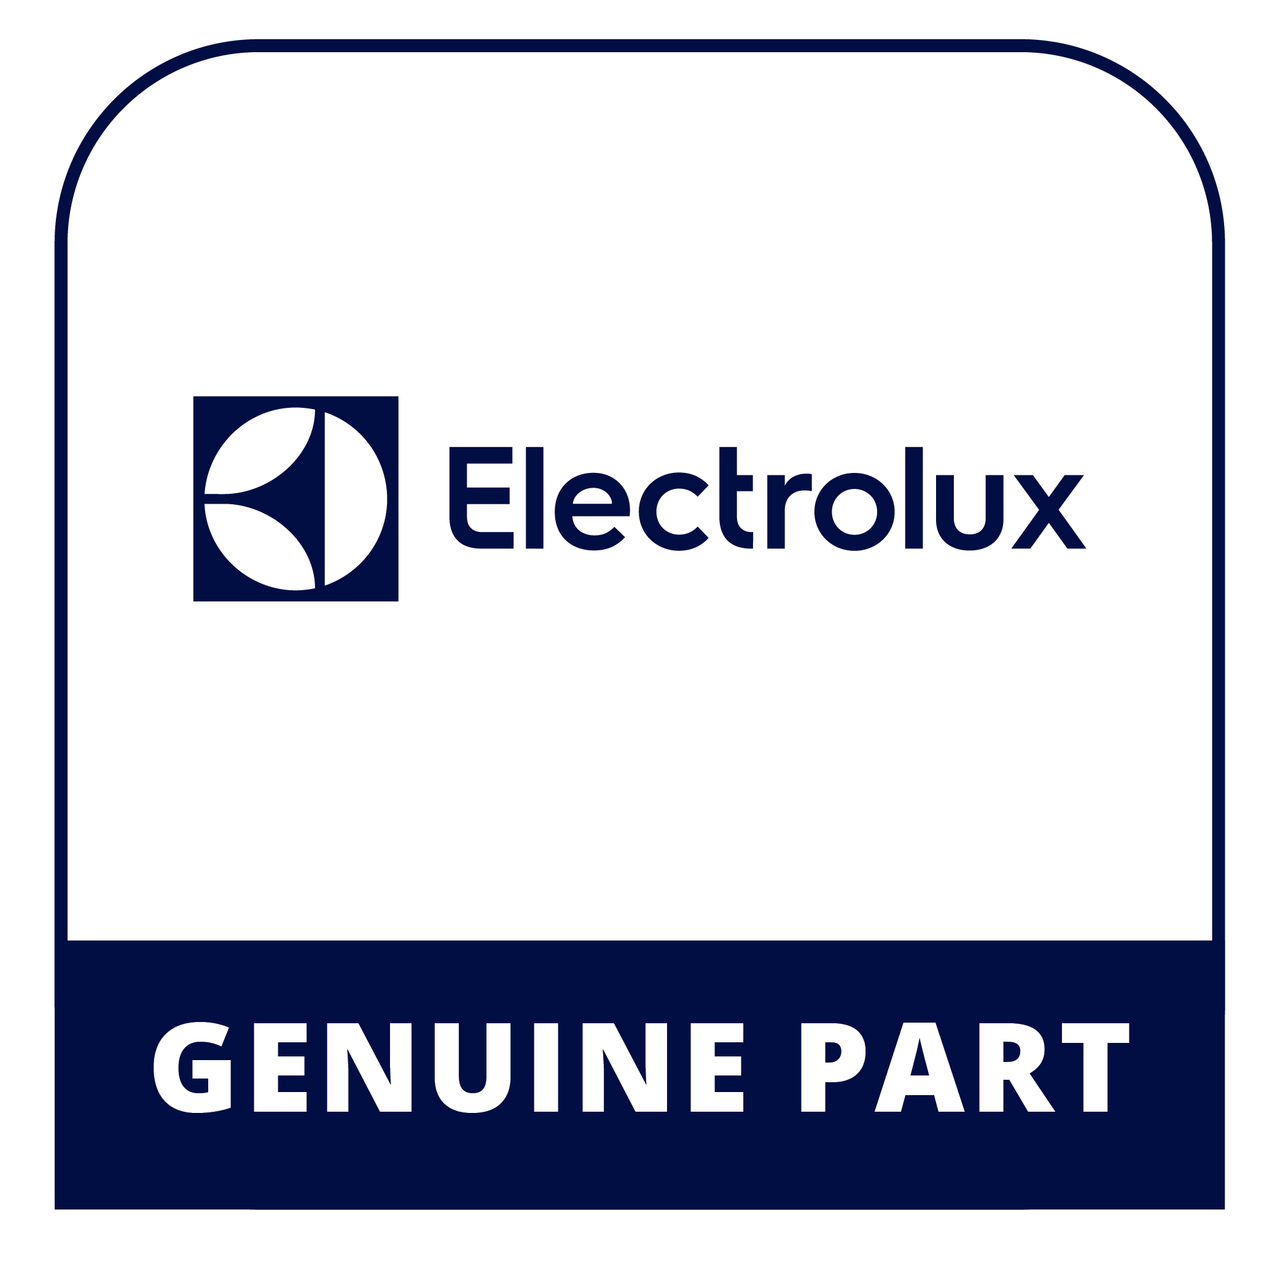 Frigidaire - Electrolux 318362822 Handle Assembly - Genuine Electrolux Part